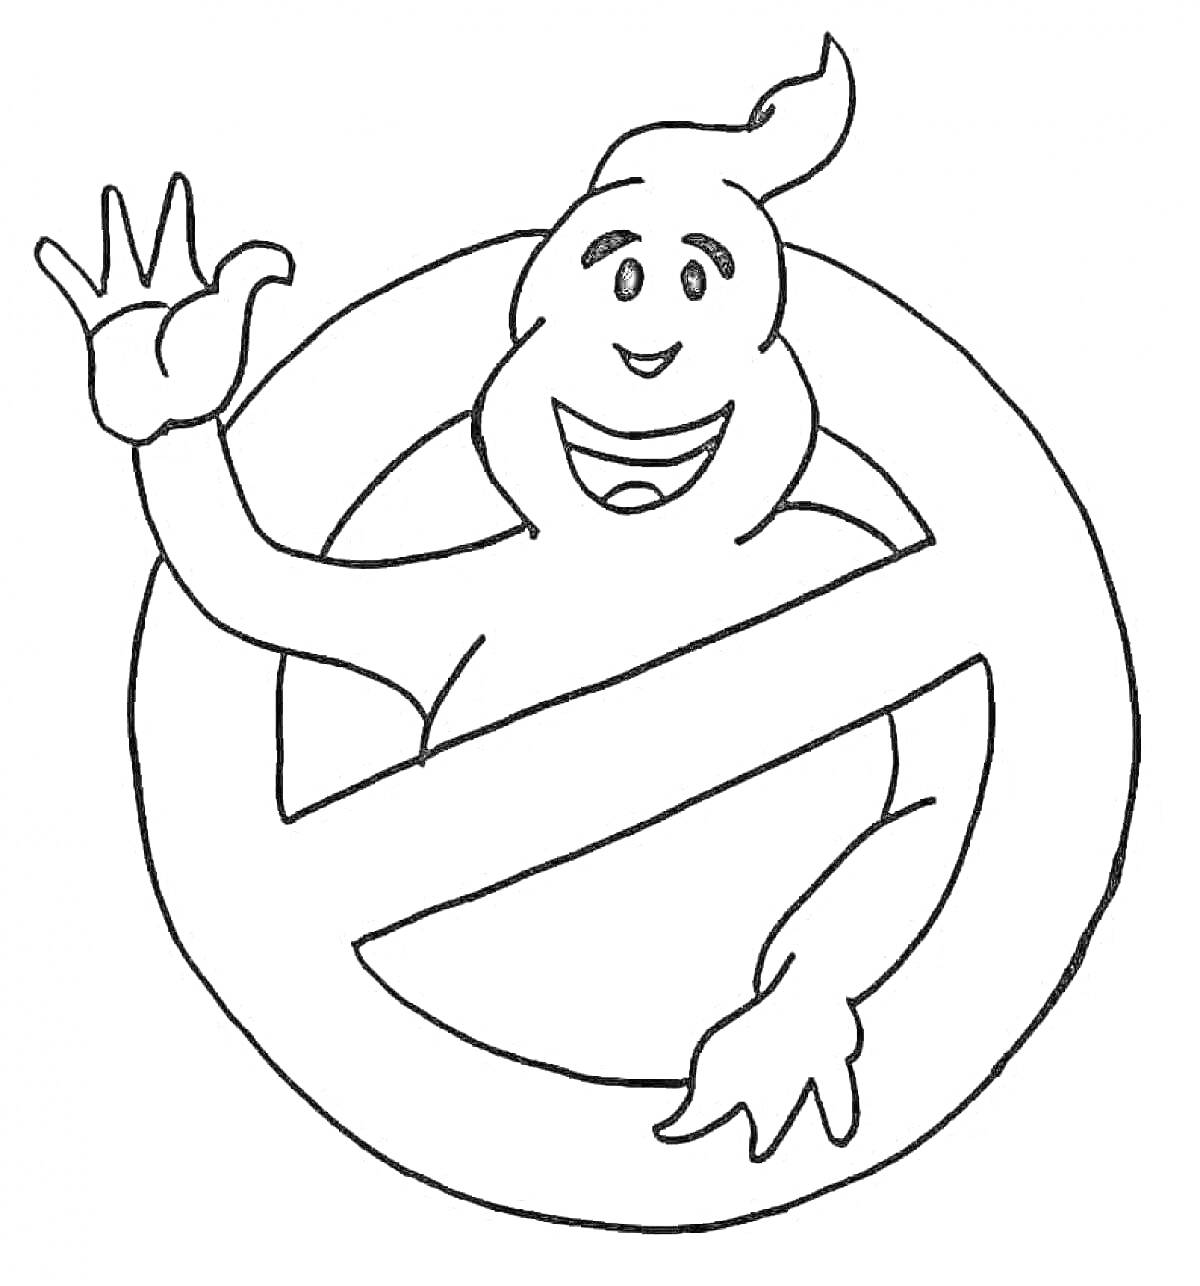 Раскраска Лизун, знак запрета, улыбающийся призрак, поднятая рука